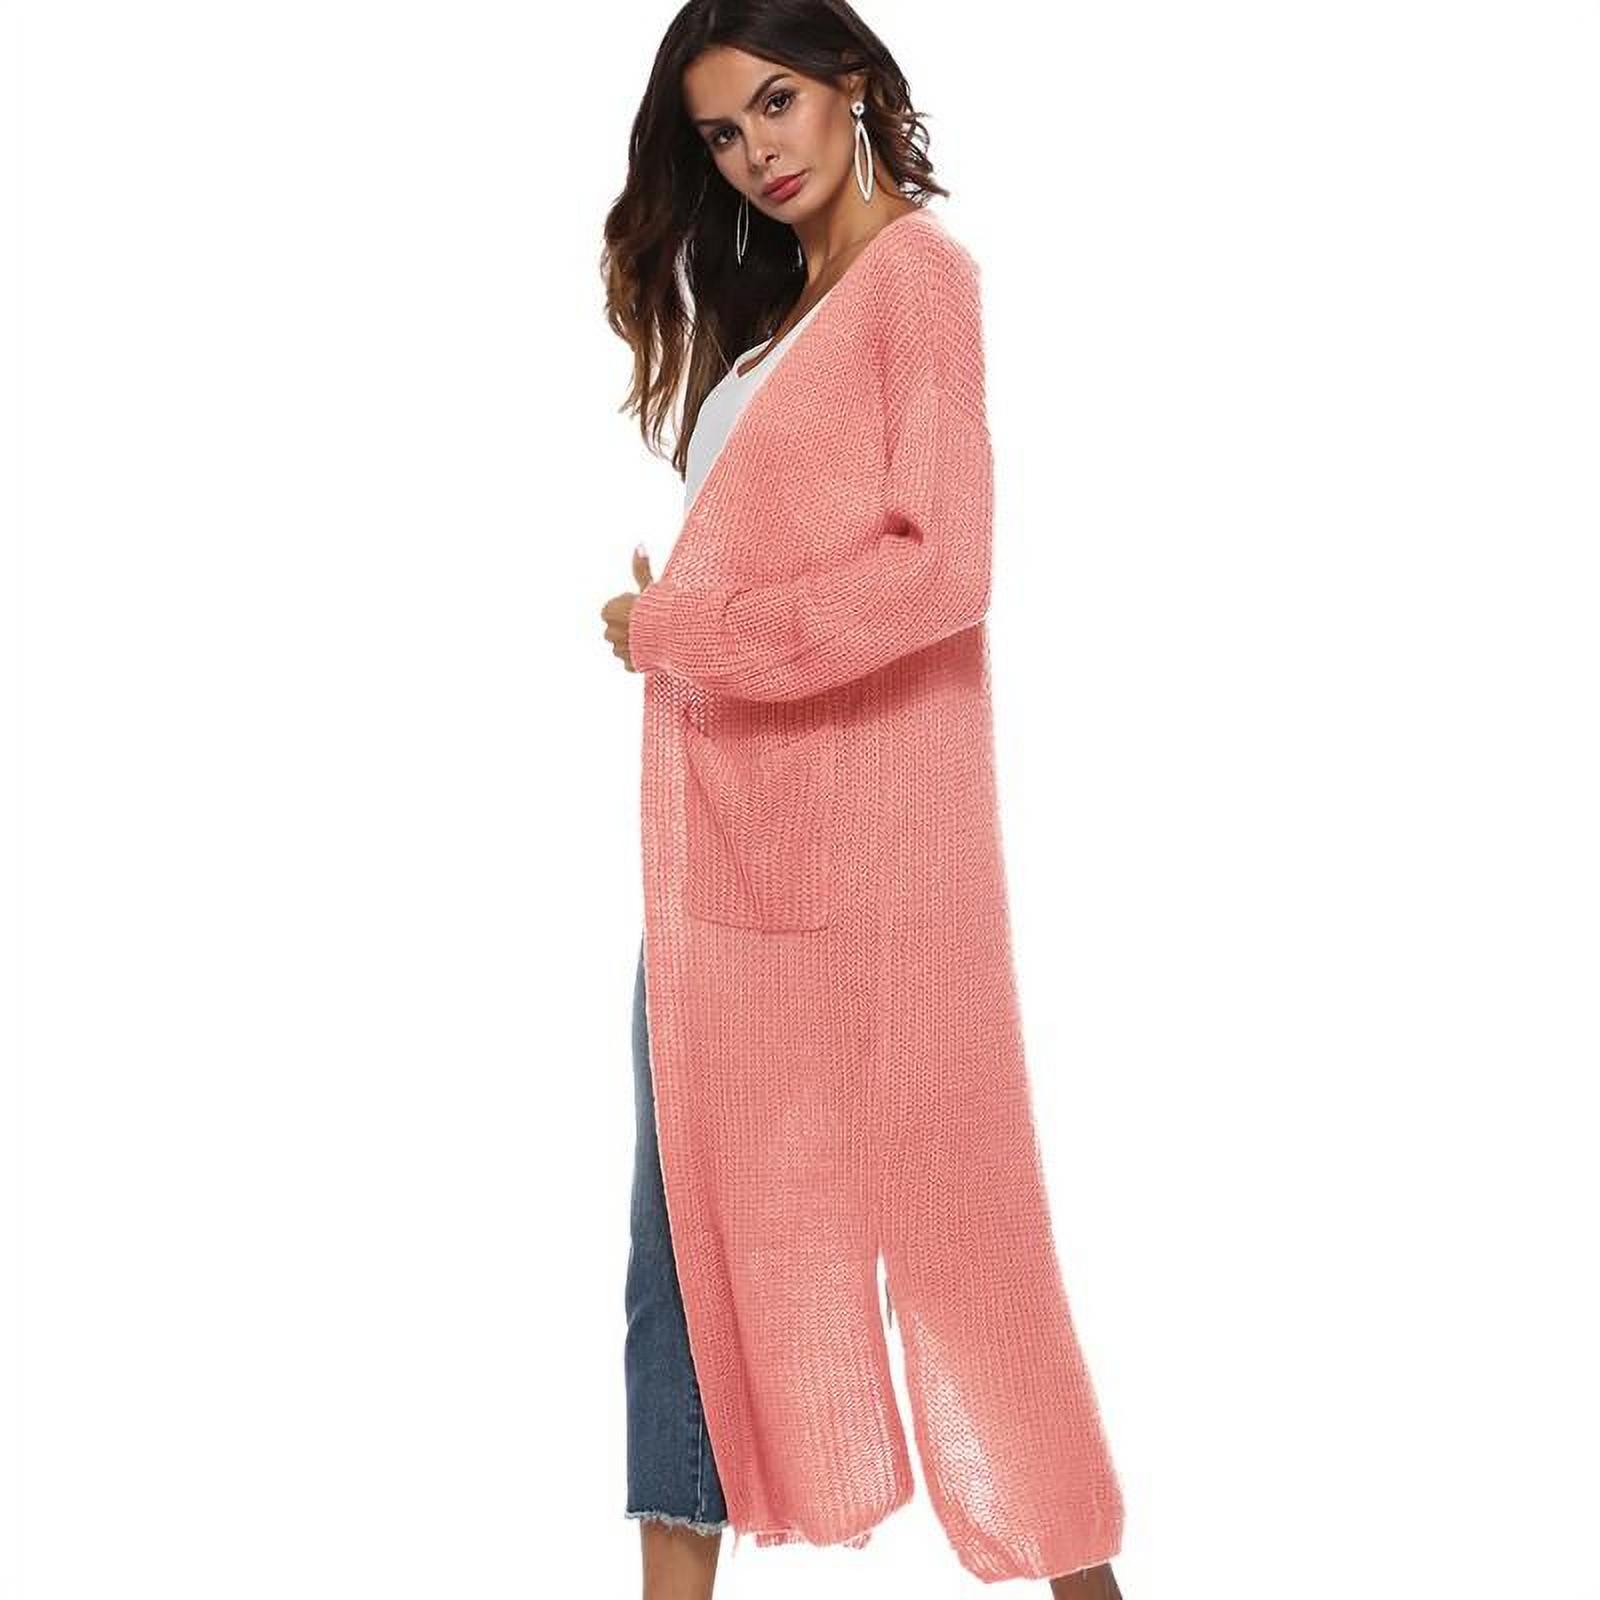 Women's Casual Long Open Front Drape Lightweight Duster Long Sleeve Cardigan, Long Sleeve Sweater Loose Asymmetrical Hem Outerwear (S-XXL), Pink, US6/M - image 4 of 5